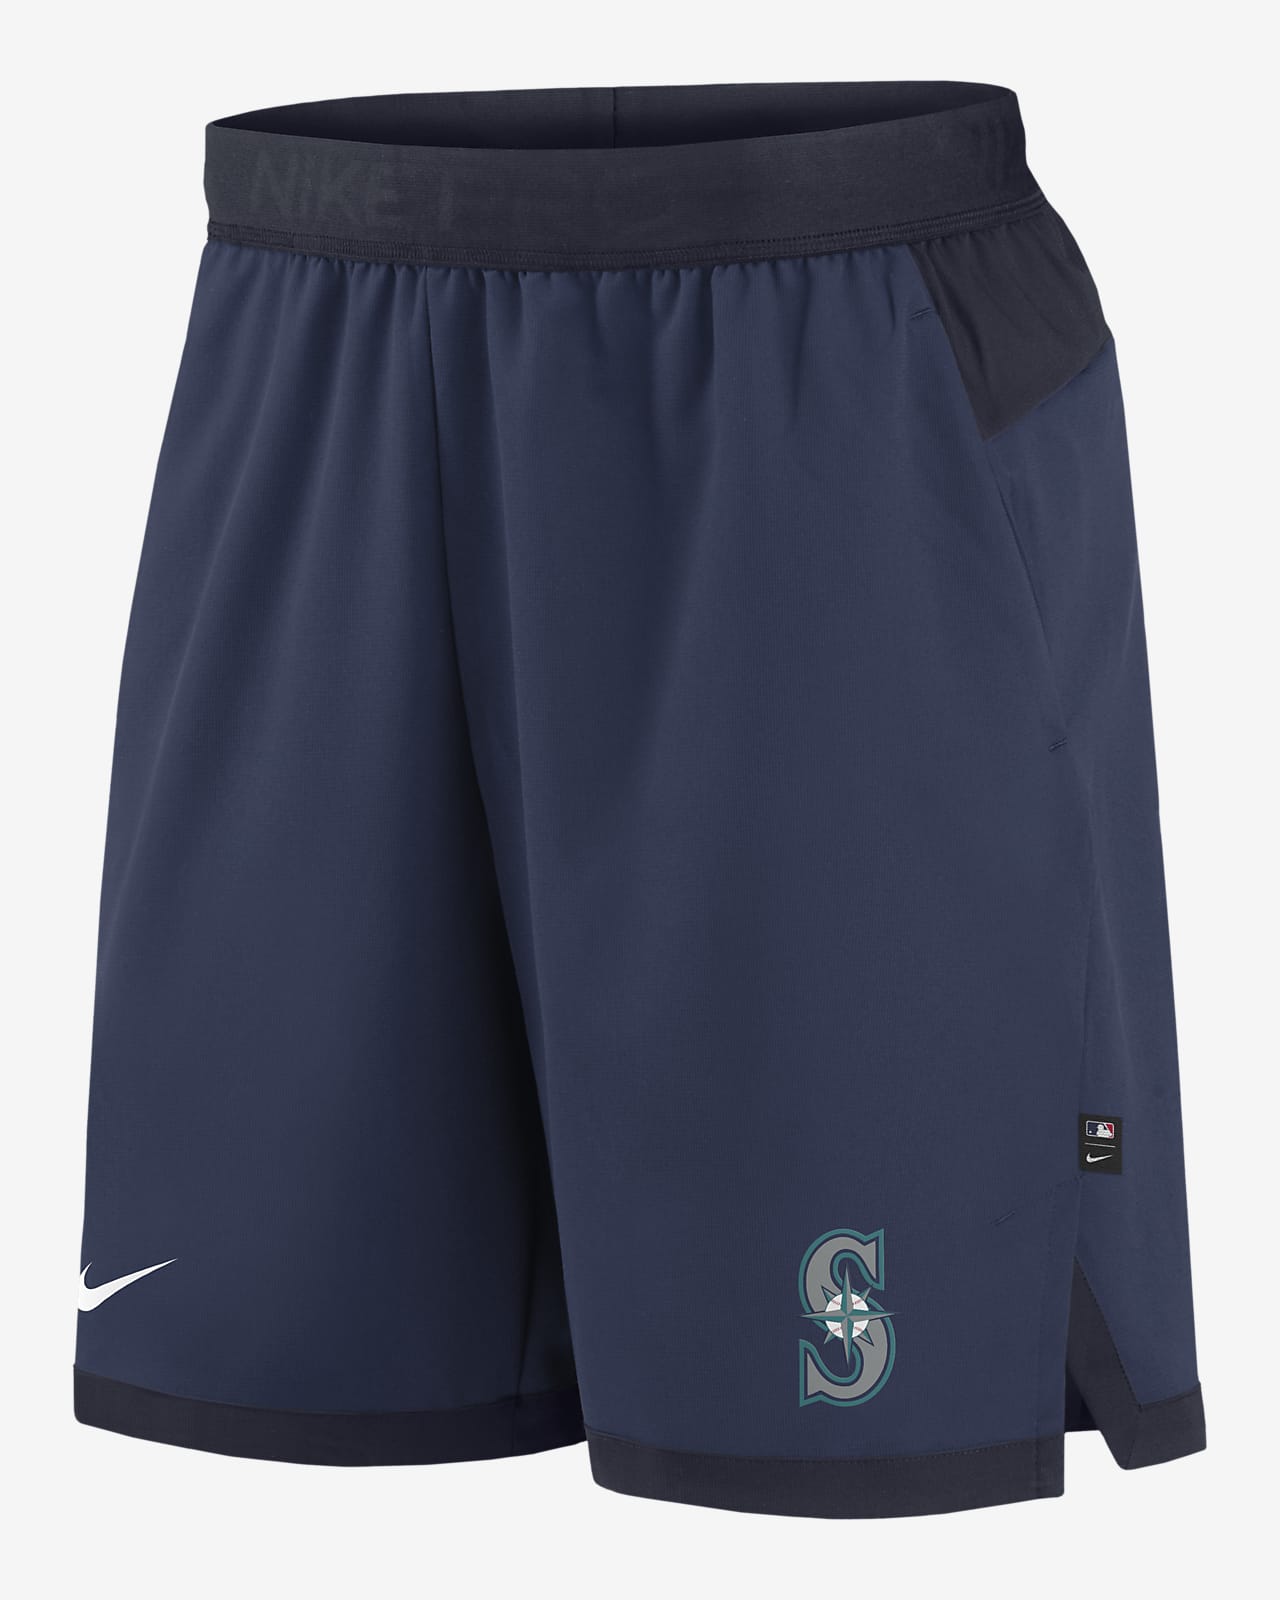 Nike Dri-FIT Flex (MLB Seattle Mariners) Men's Shorts